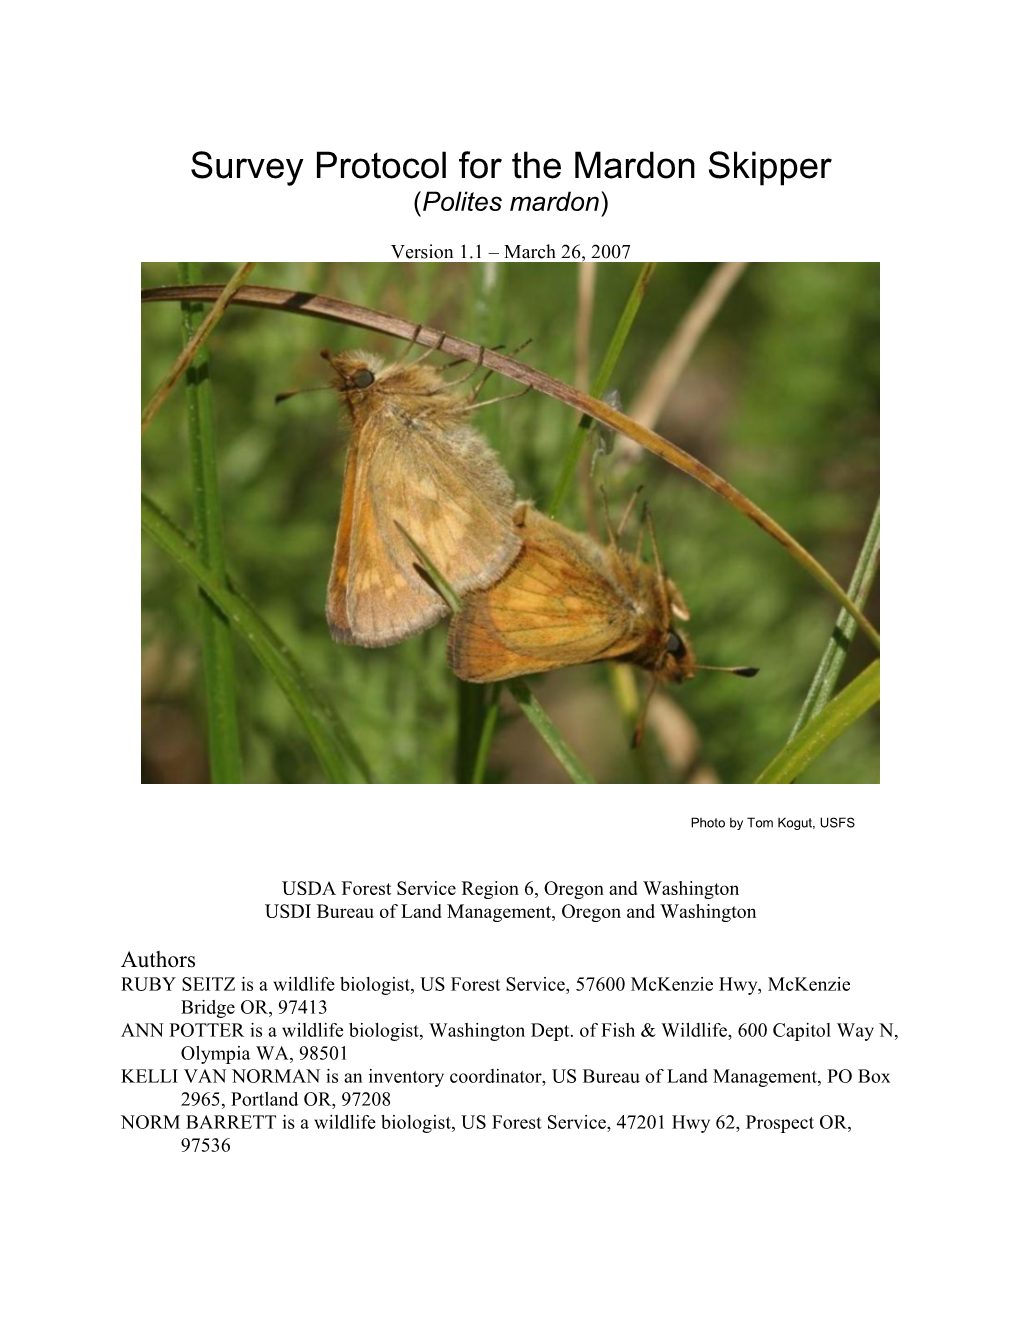 Mardon Skipper - Habitat and Survey Method